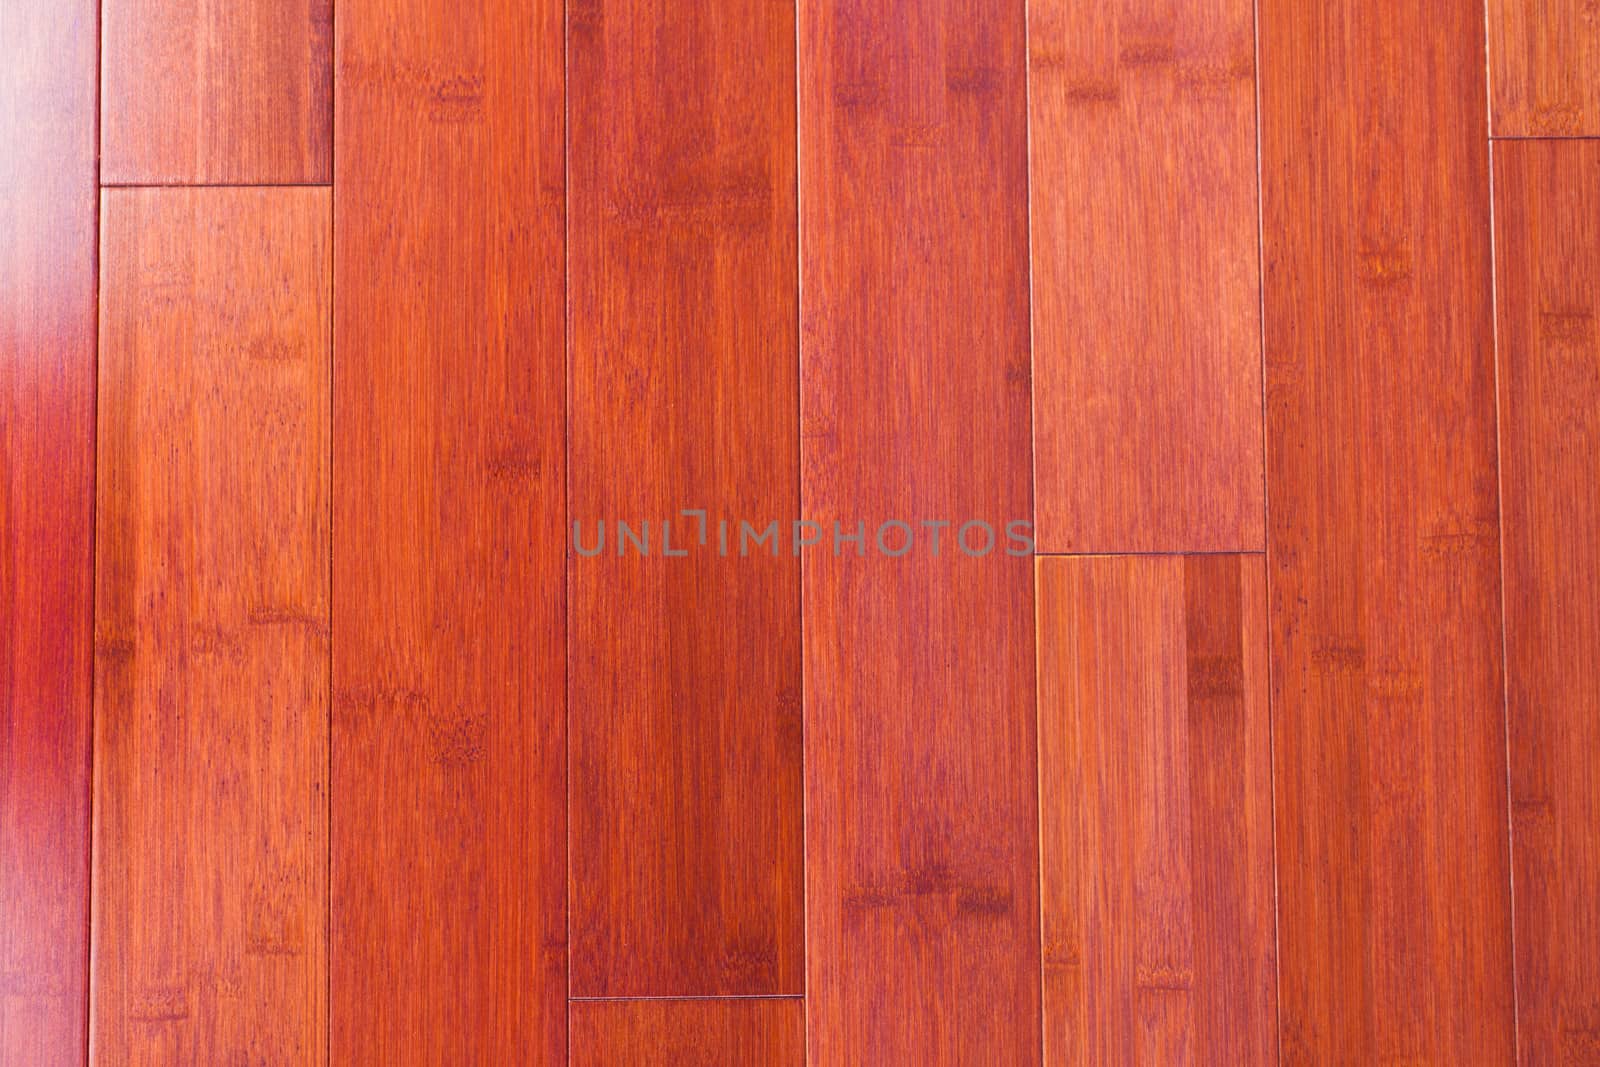 Wooden bamboo flooring grain texture background by PiLens